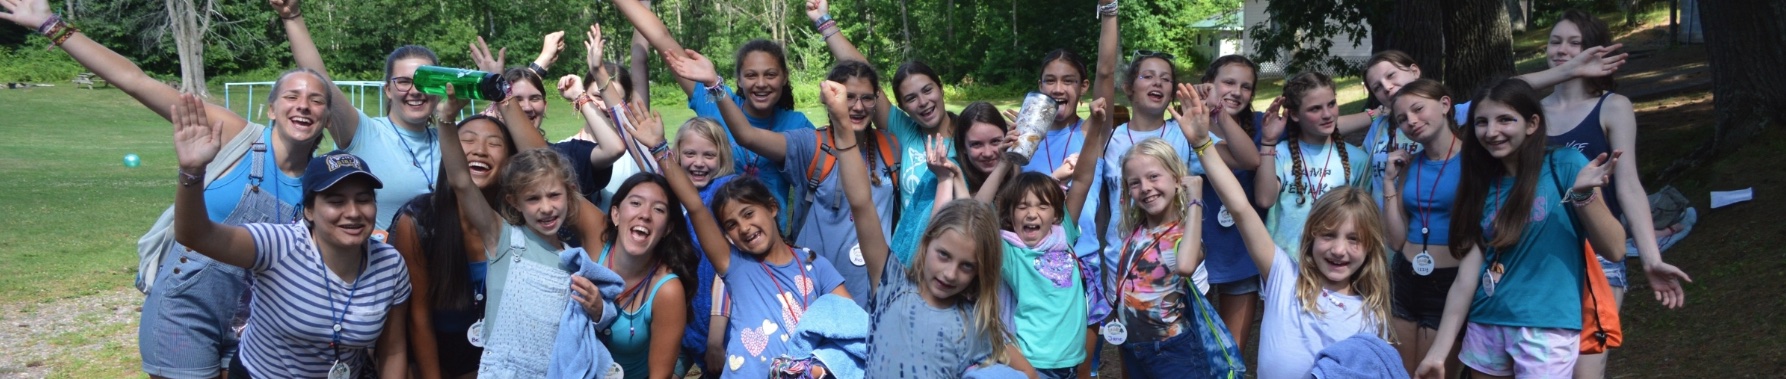 5 Ways Girls Build Lifelong Friendships at Summer Camp WeHakee